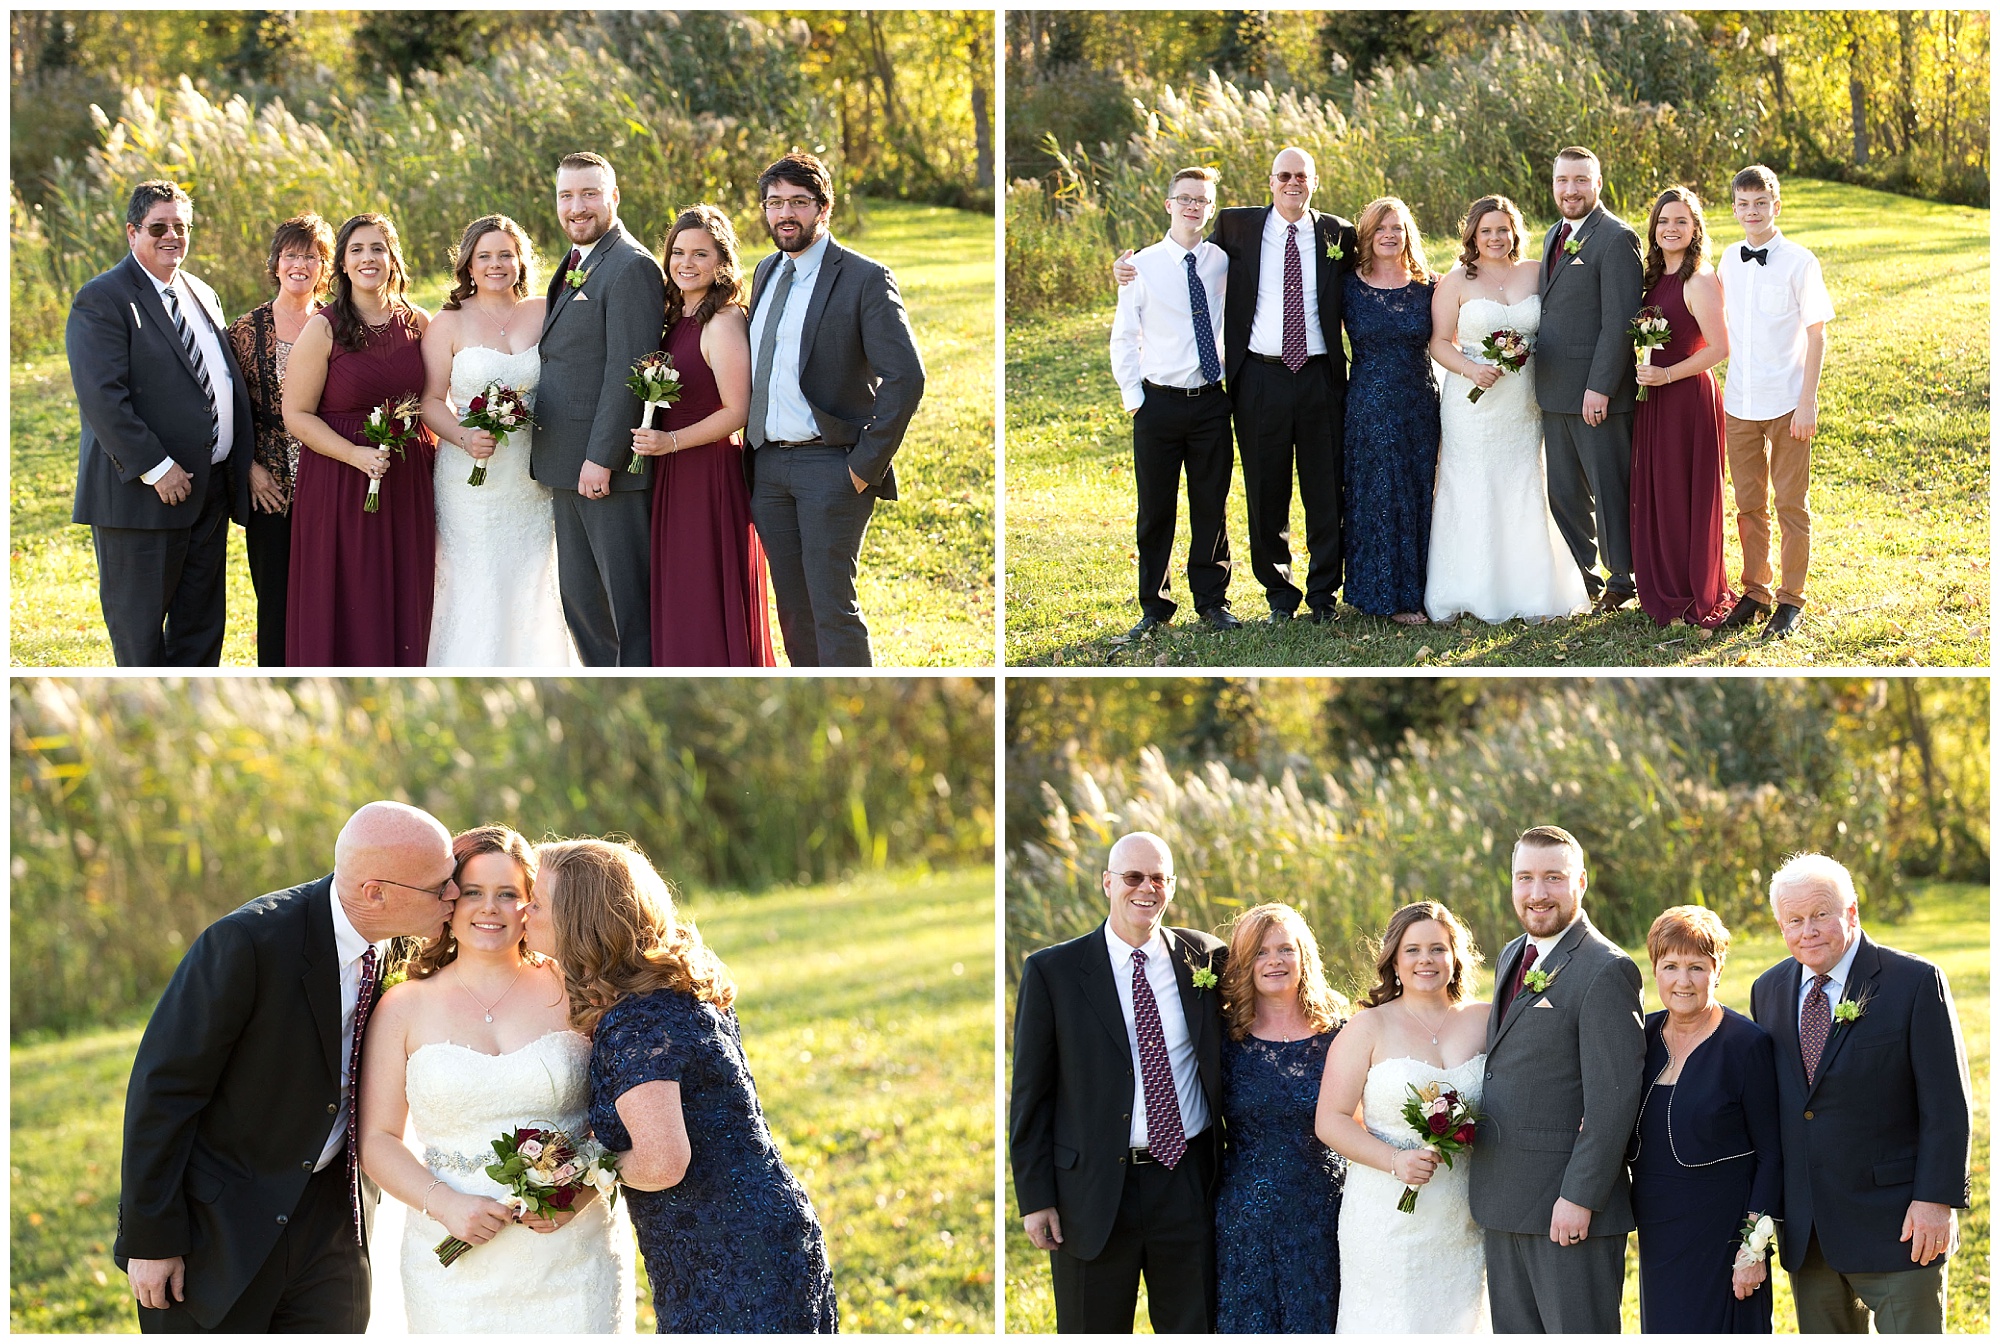 Four photos of family wedding formal group photos.